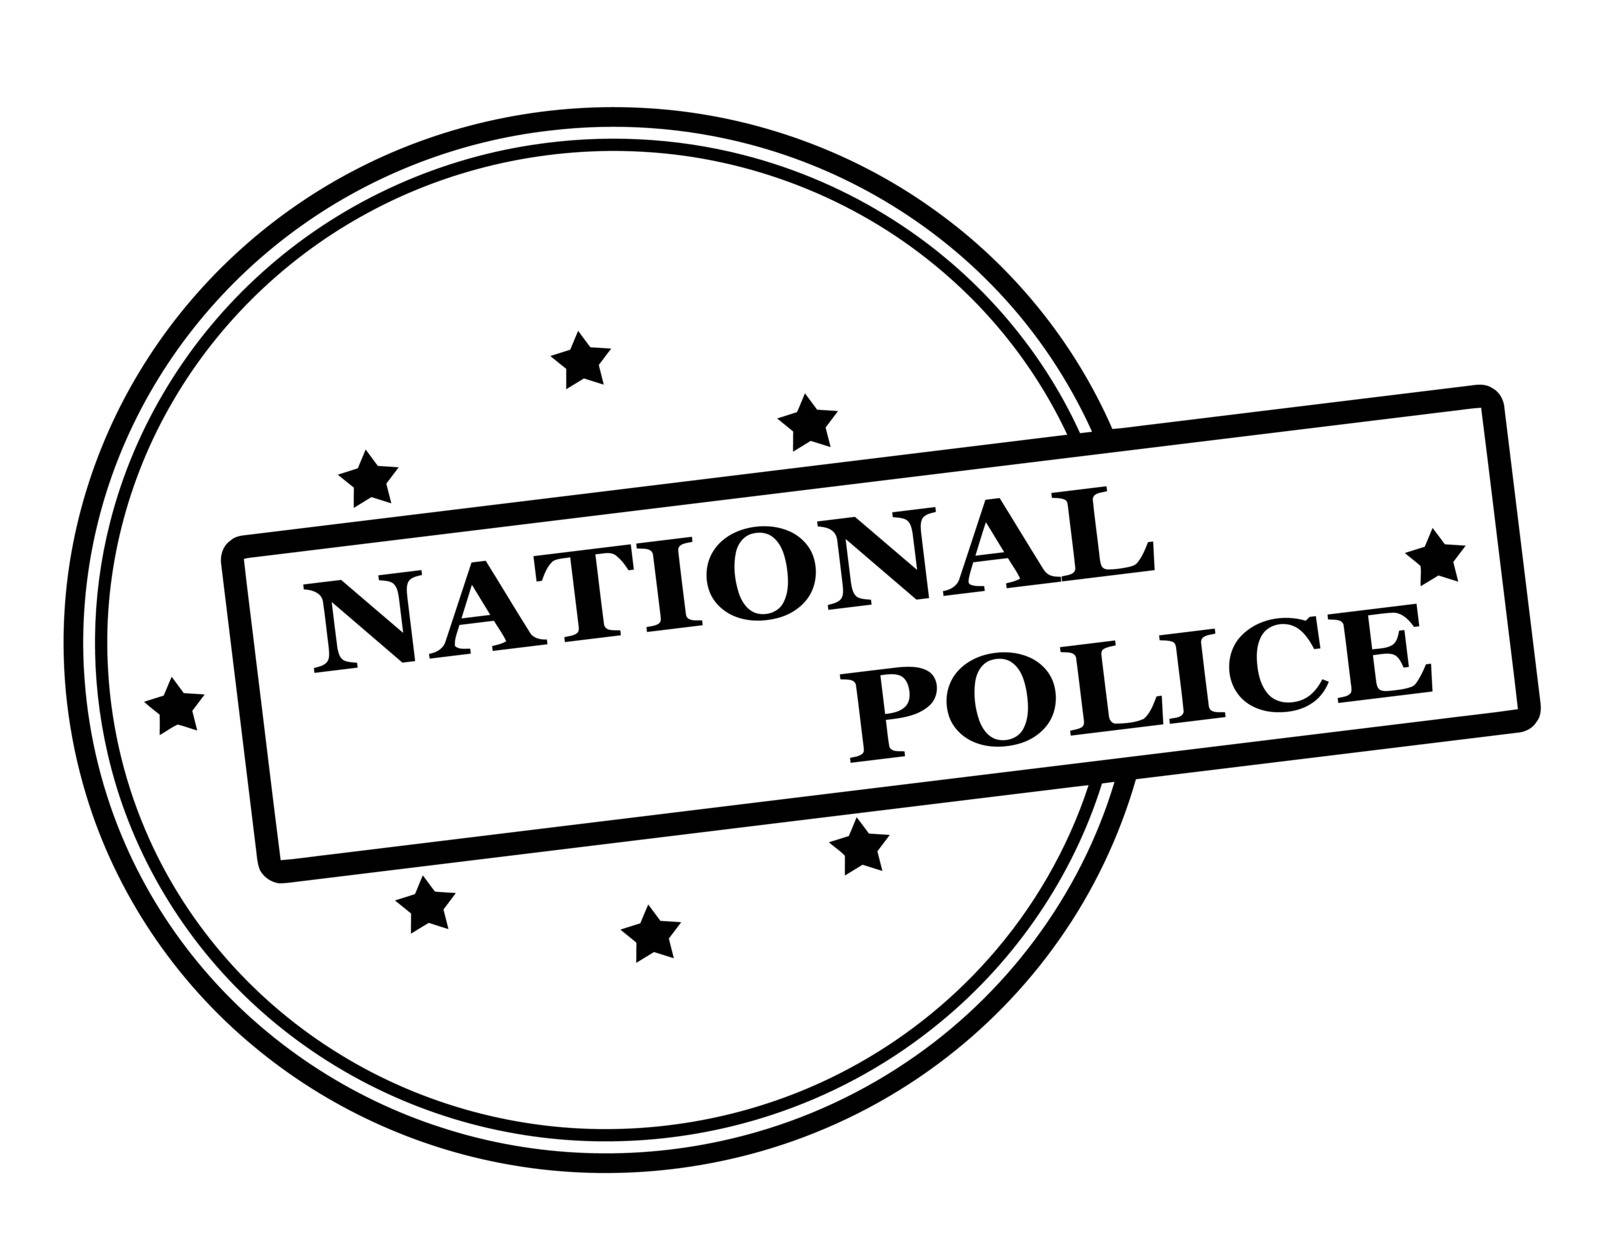 National police by carmenbobo